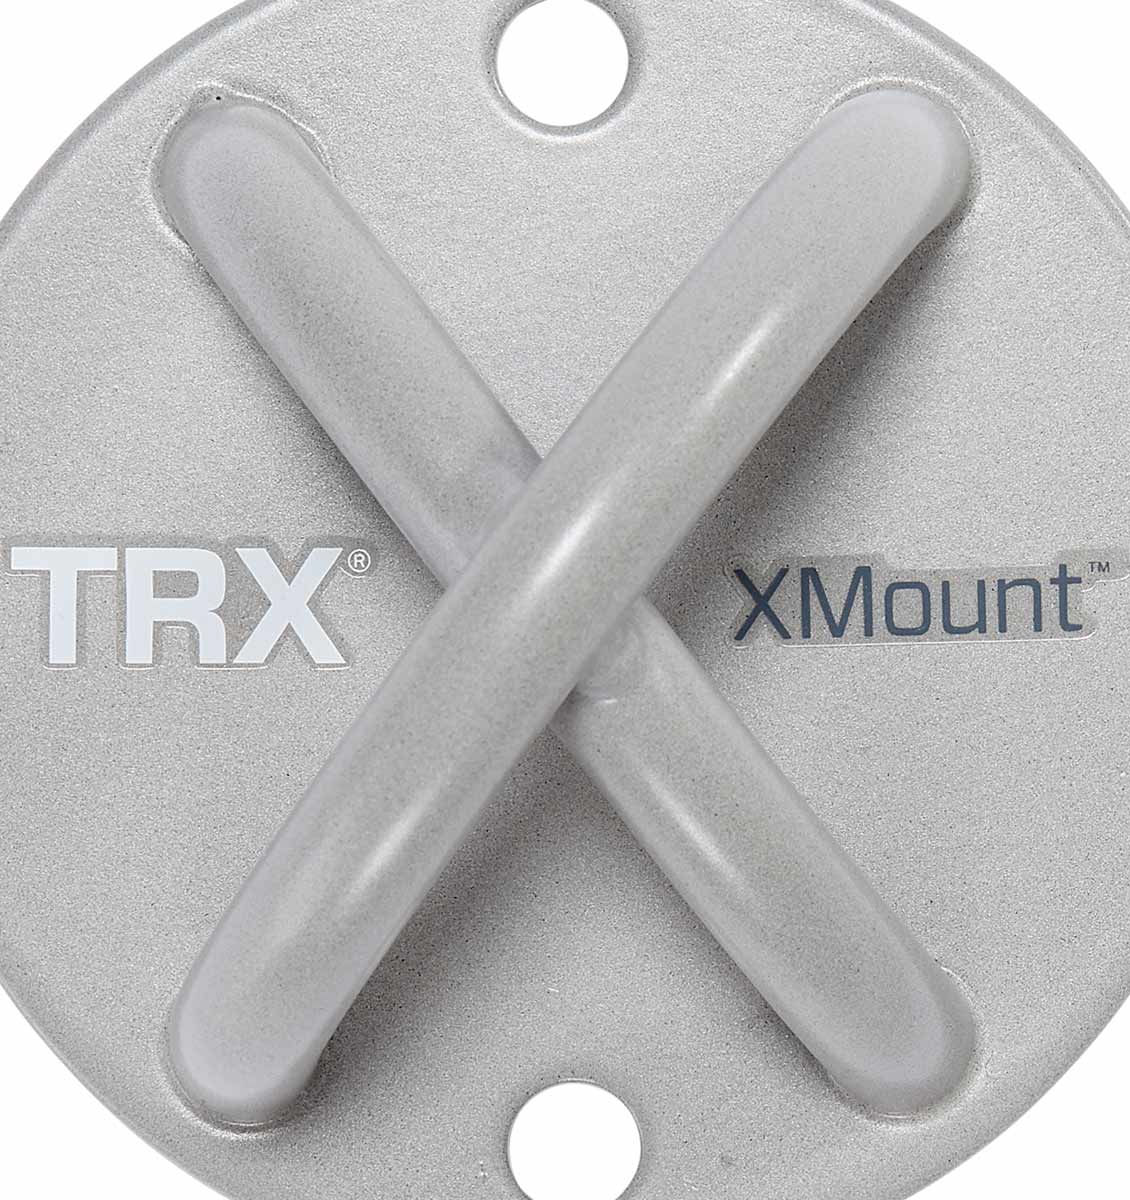 TRX1XMOUNT00 TRX TRX Bracket X Mount Wall Ceiling Mount Anchor Top Close Up